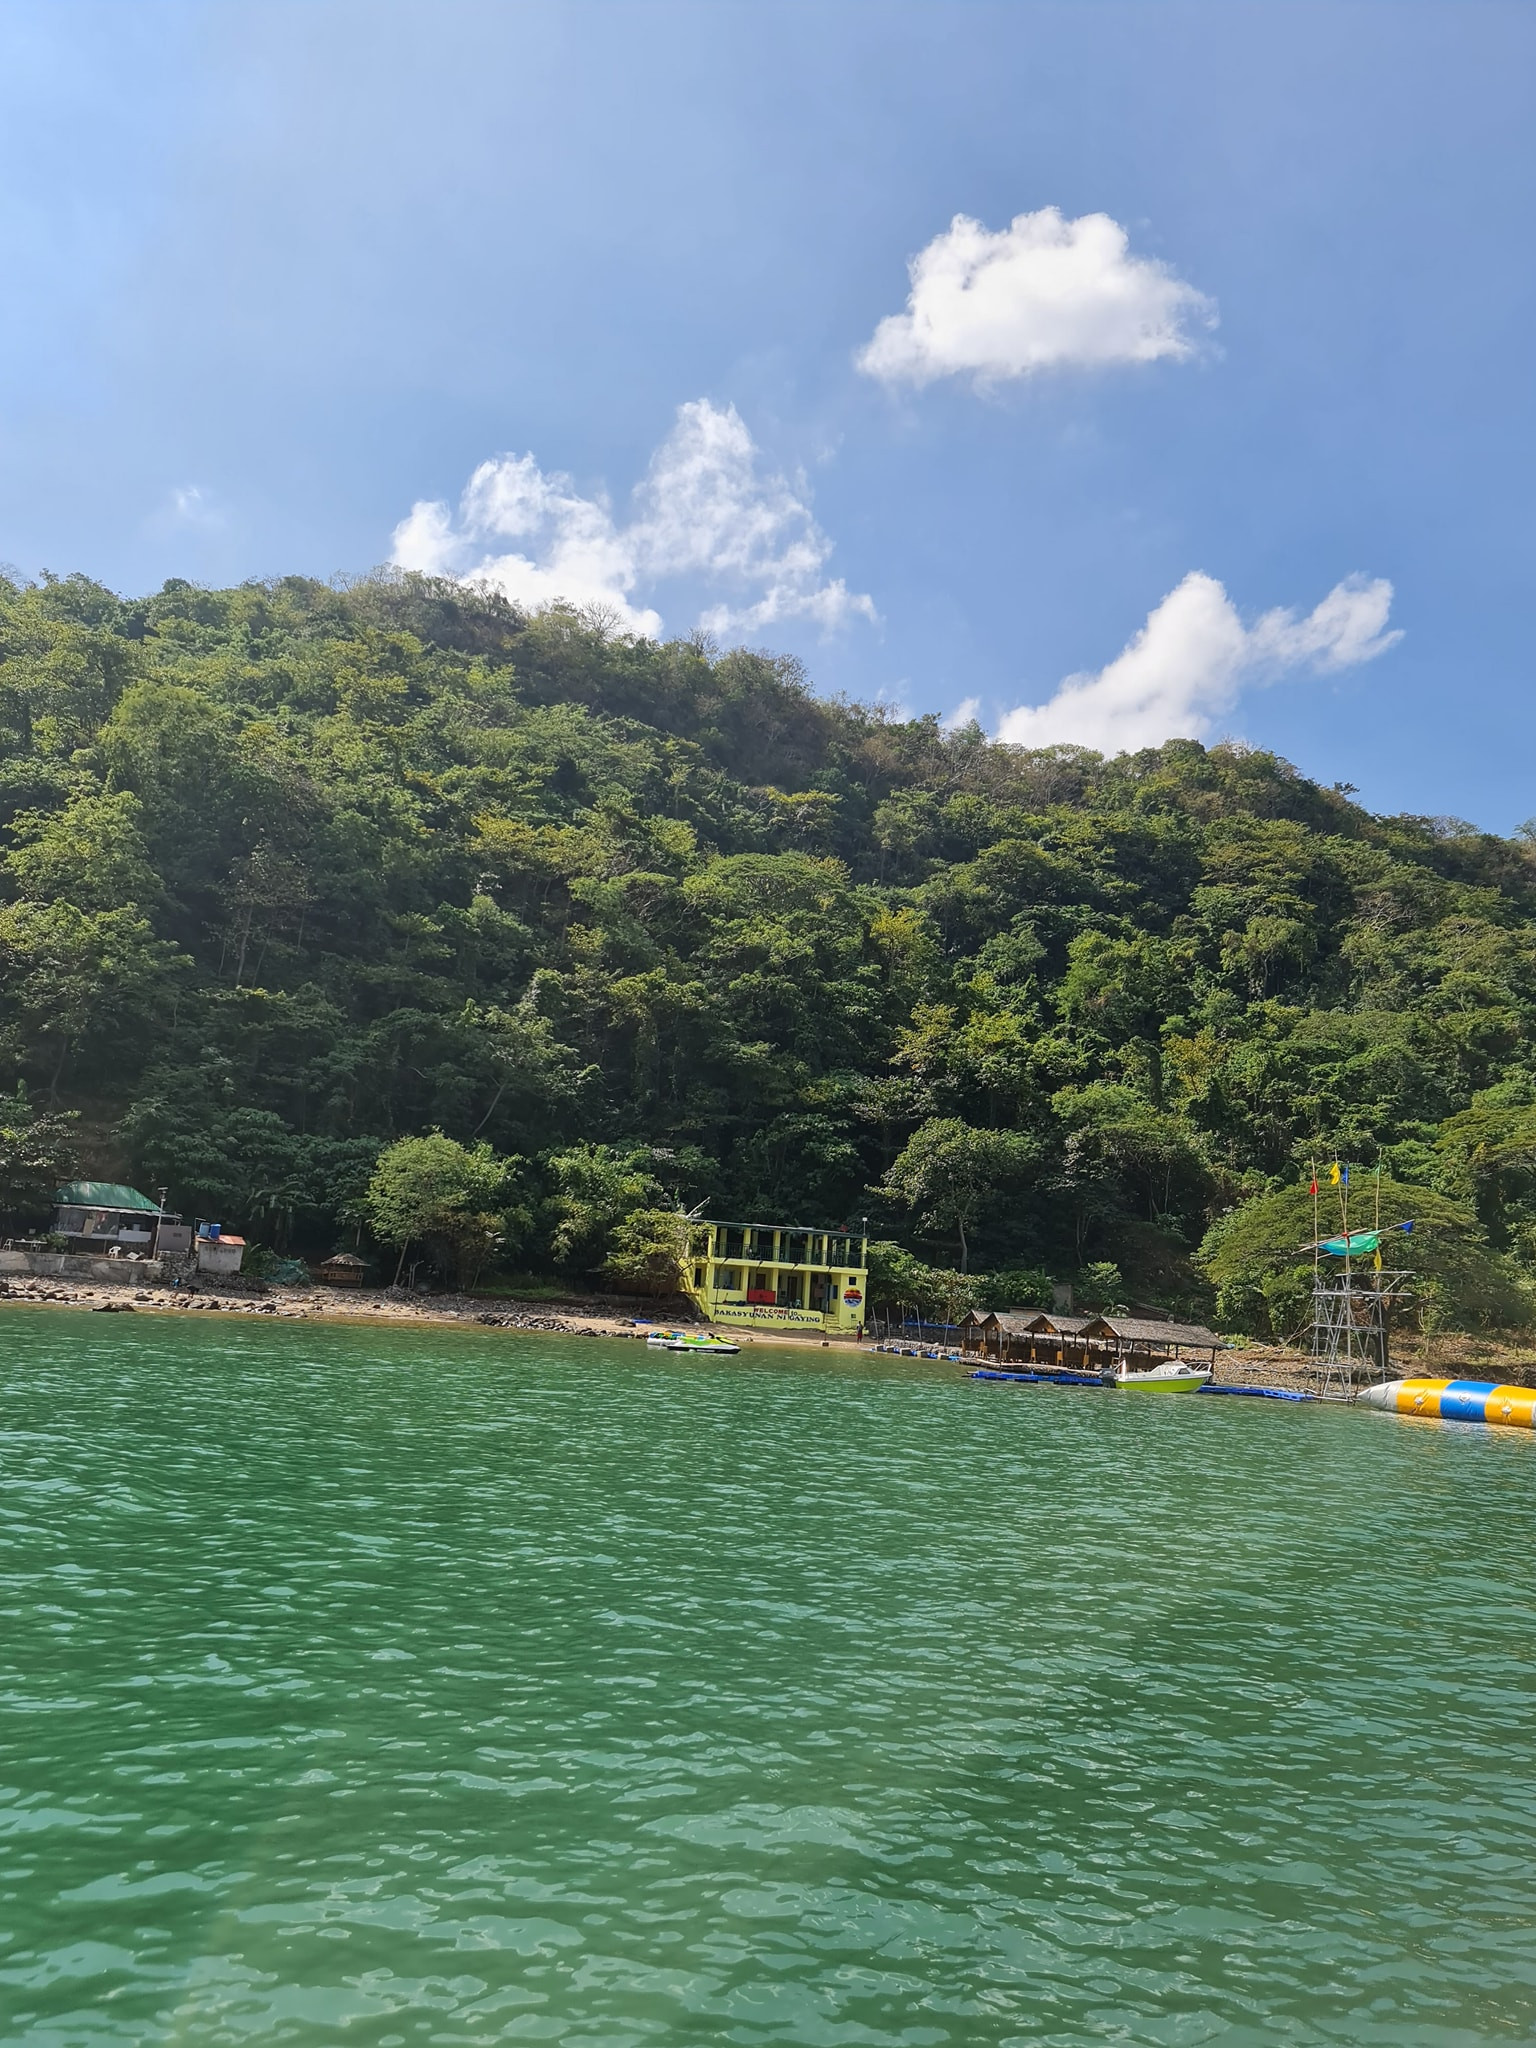 Bakasyunan Ni Gaying - Pool and Beach Resort (MAIN SITE)